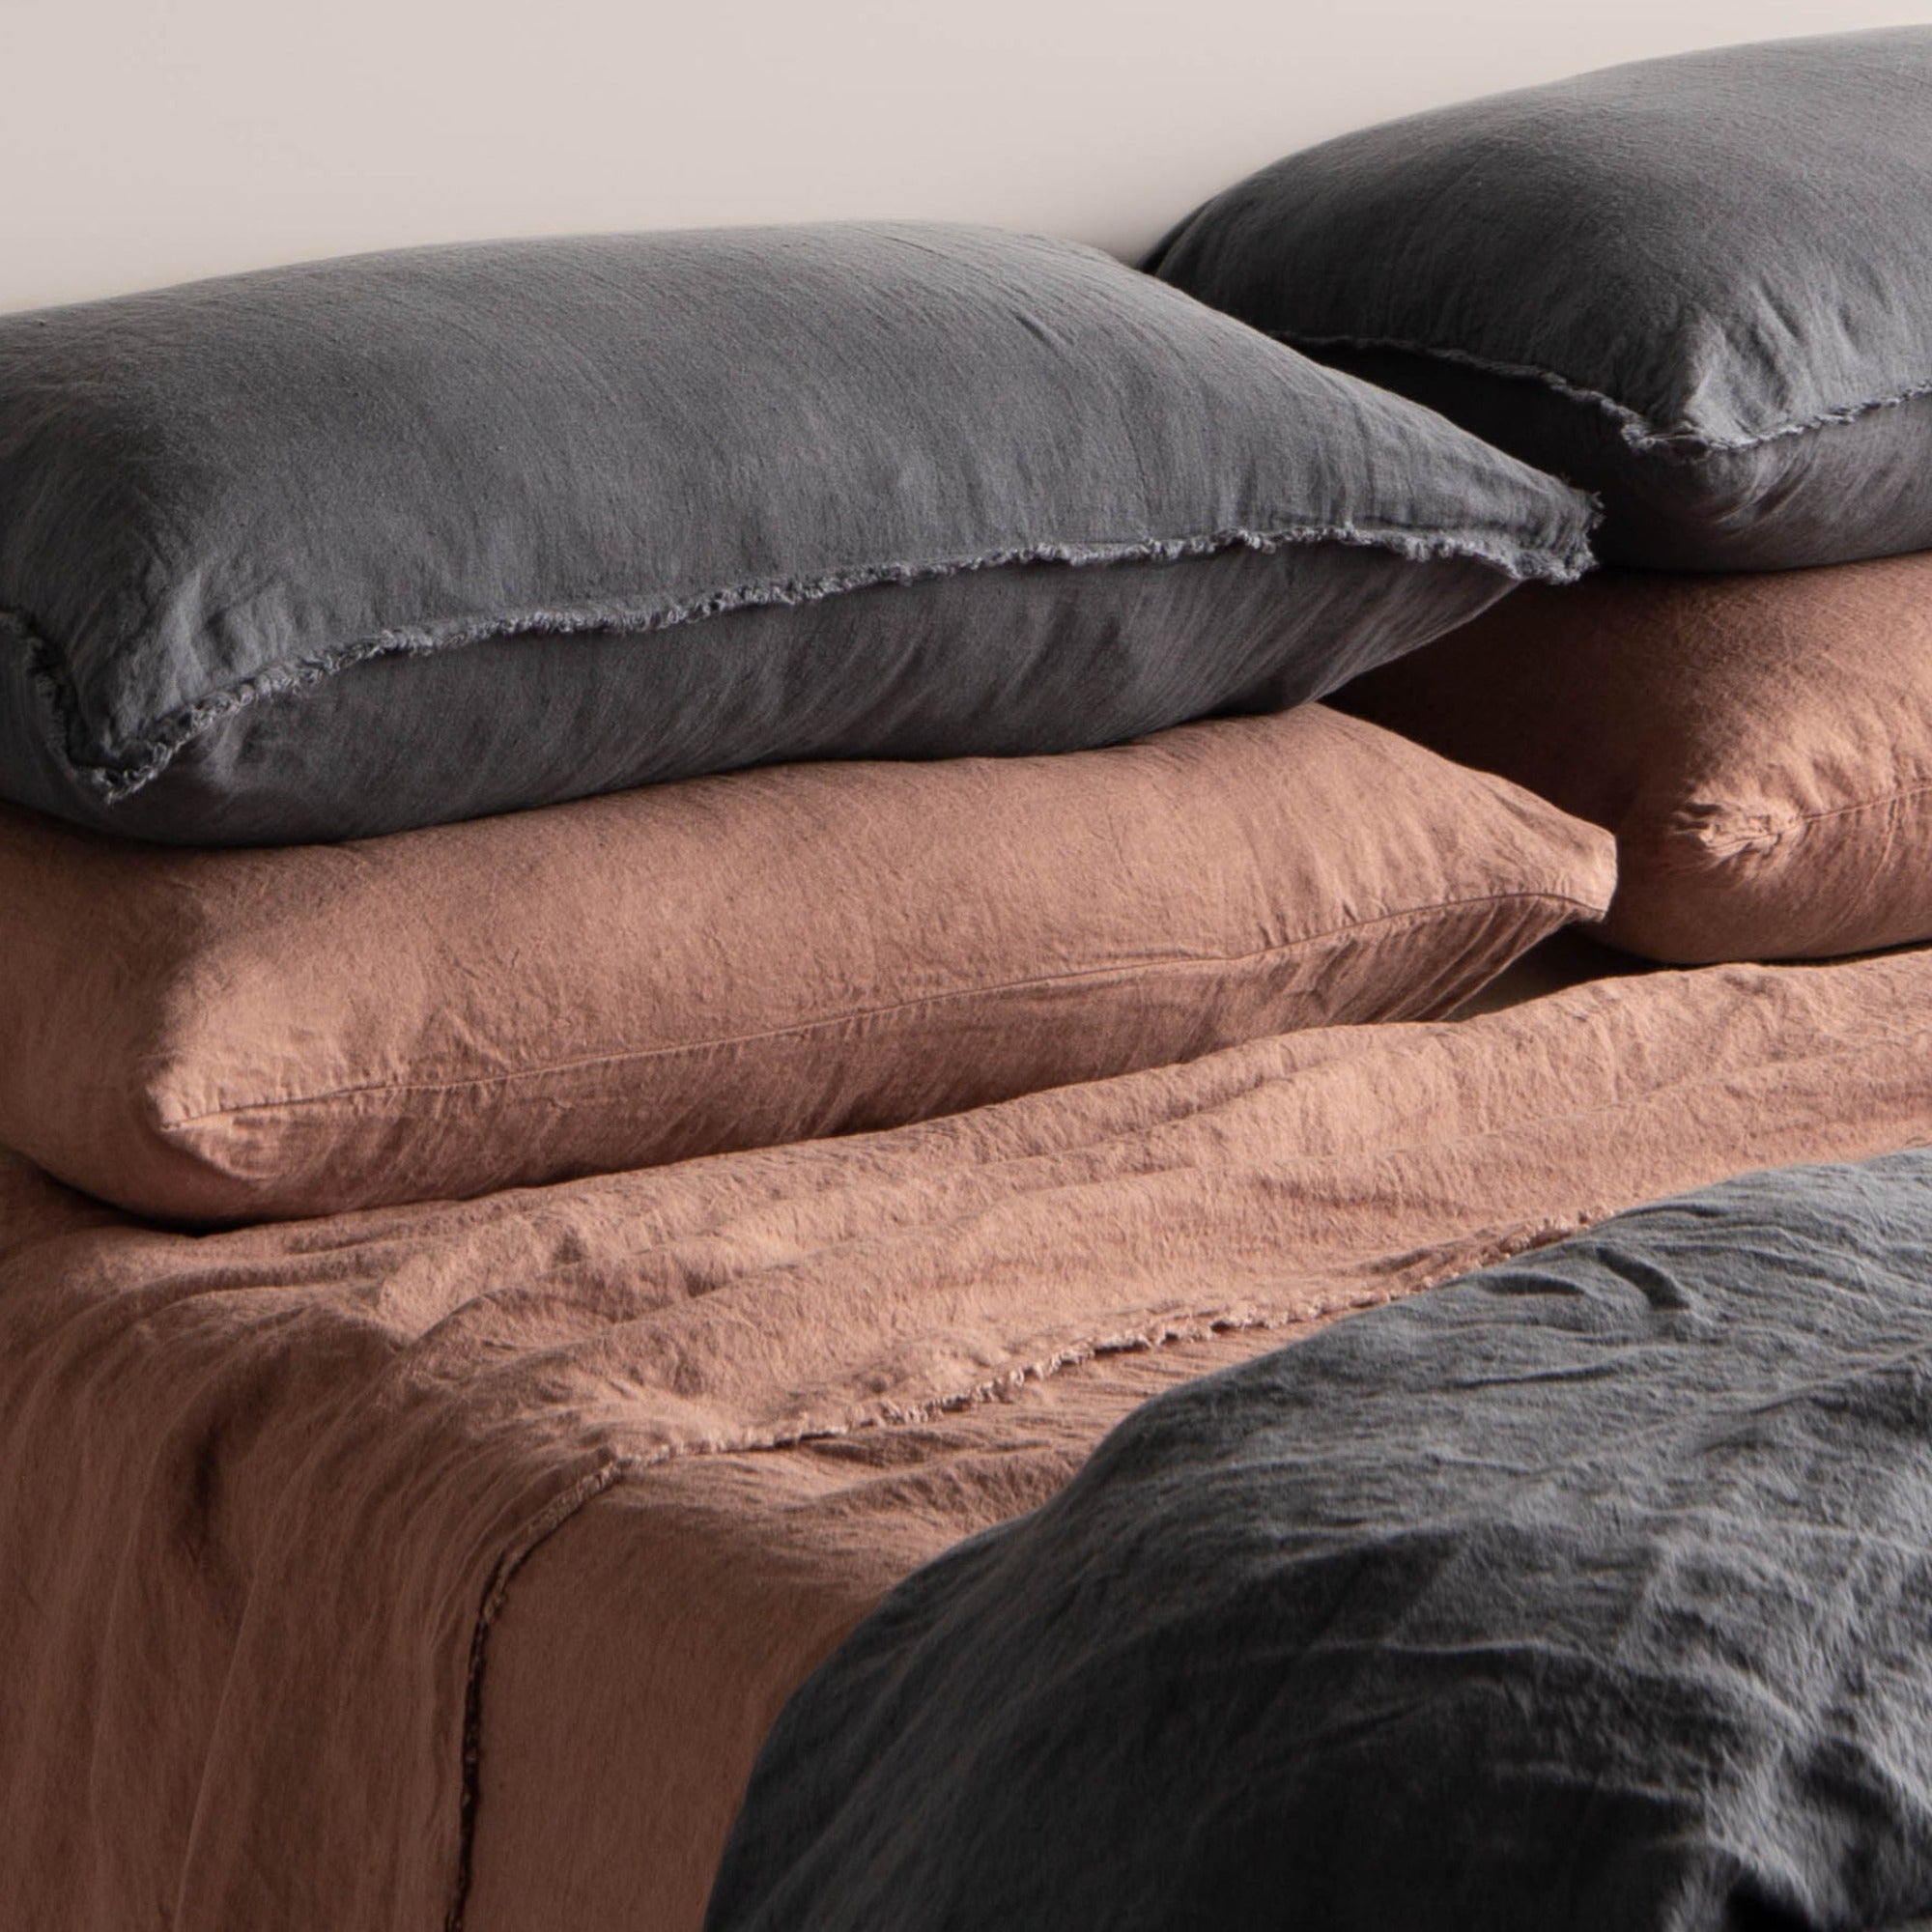 Basix Linen Pillowcase | Clay Pink  | Hale Mercantile Co.